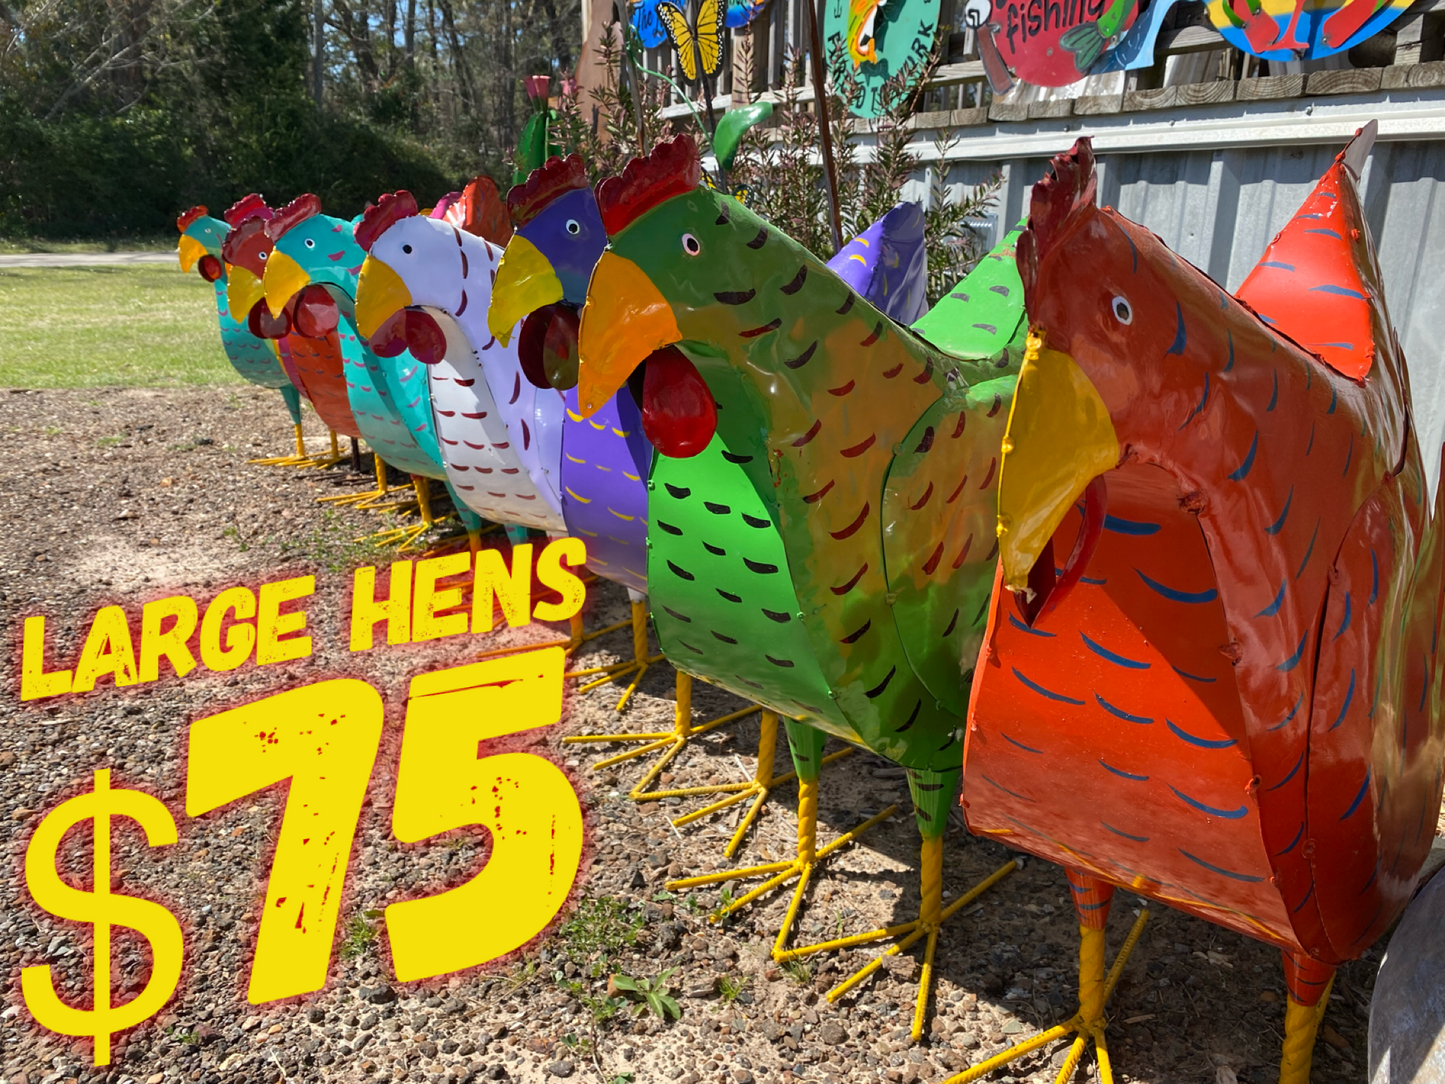 Large Hens Yard Art